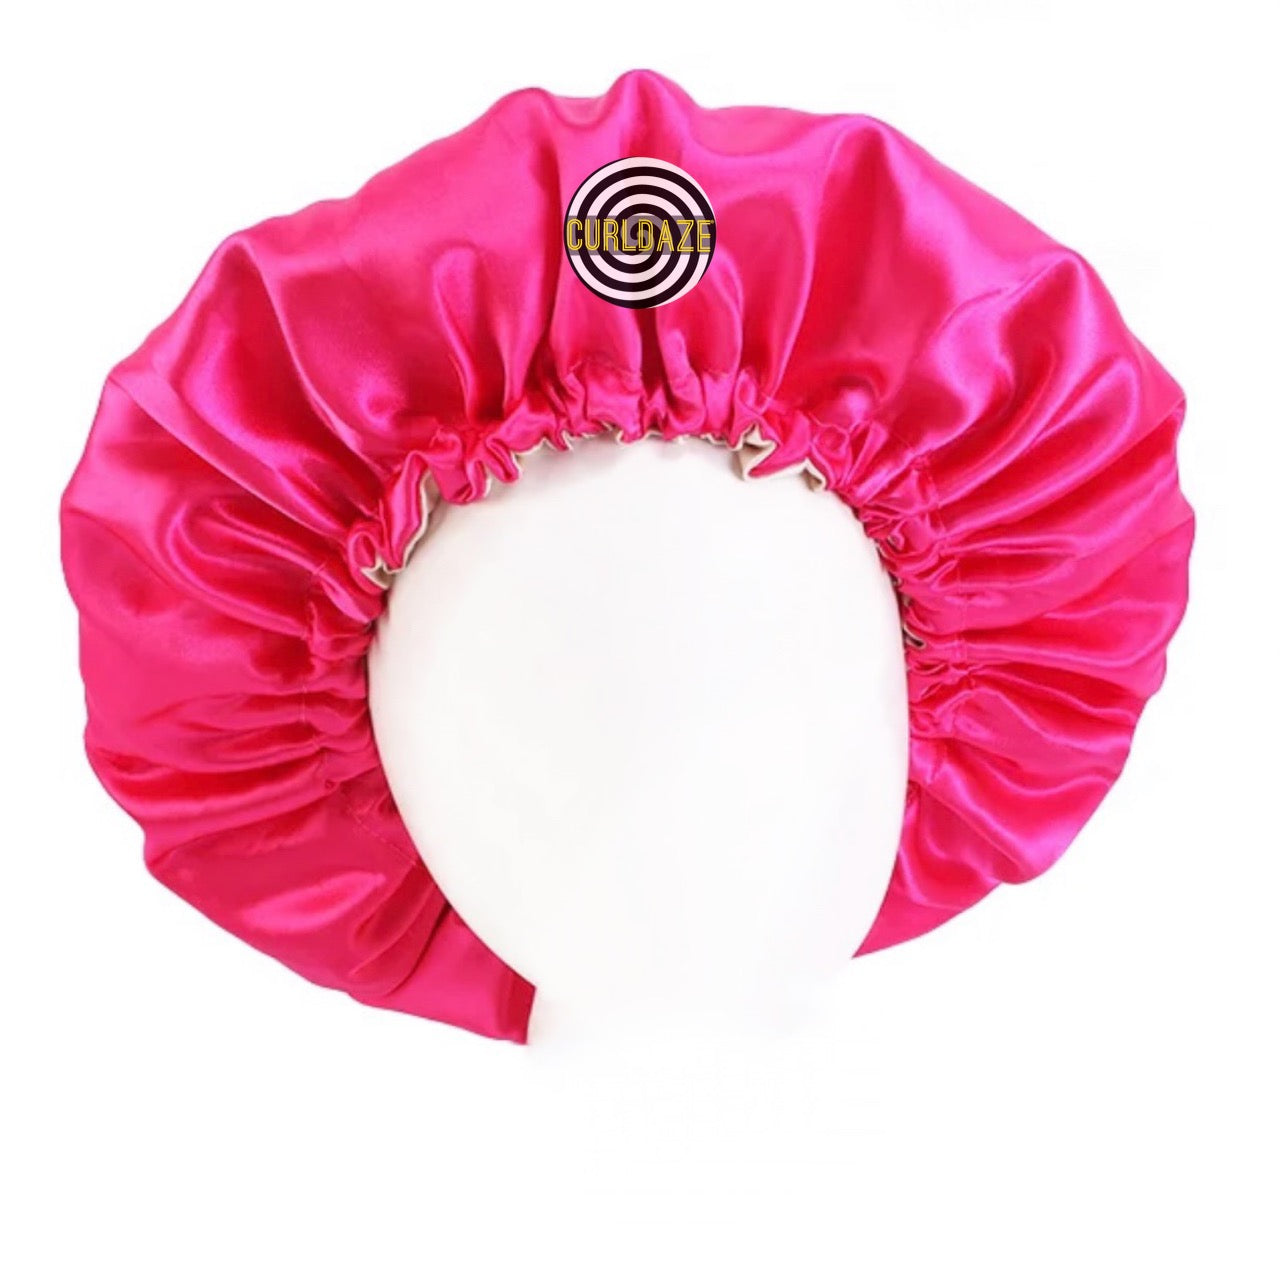 Satin Bonnet for Women, Silk Bonnet for Curly Hair Thailand